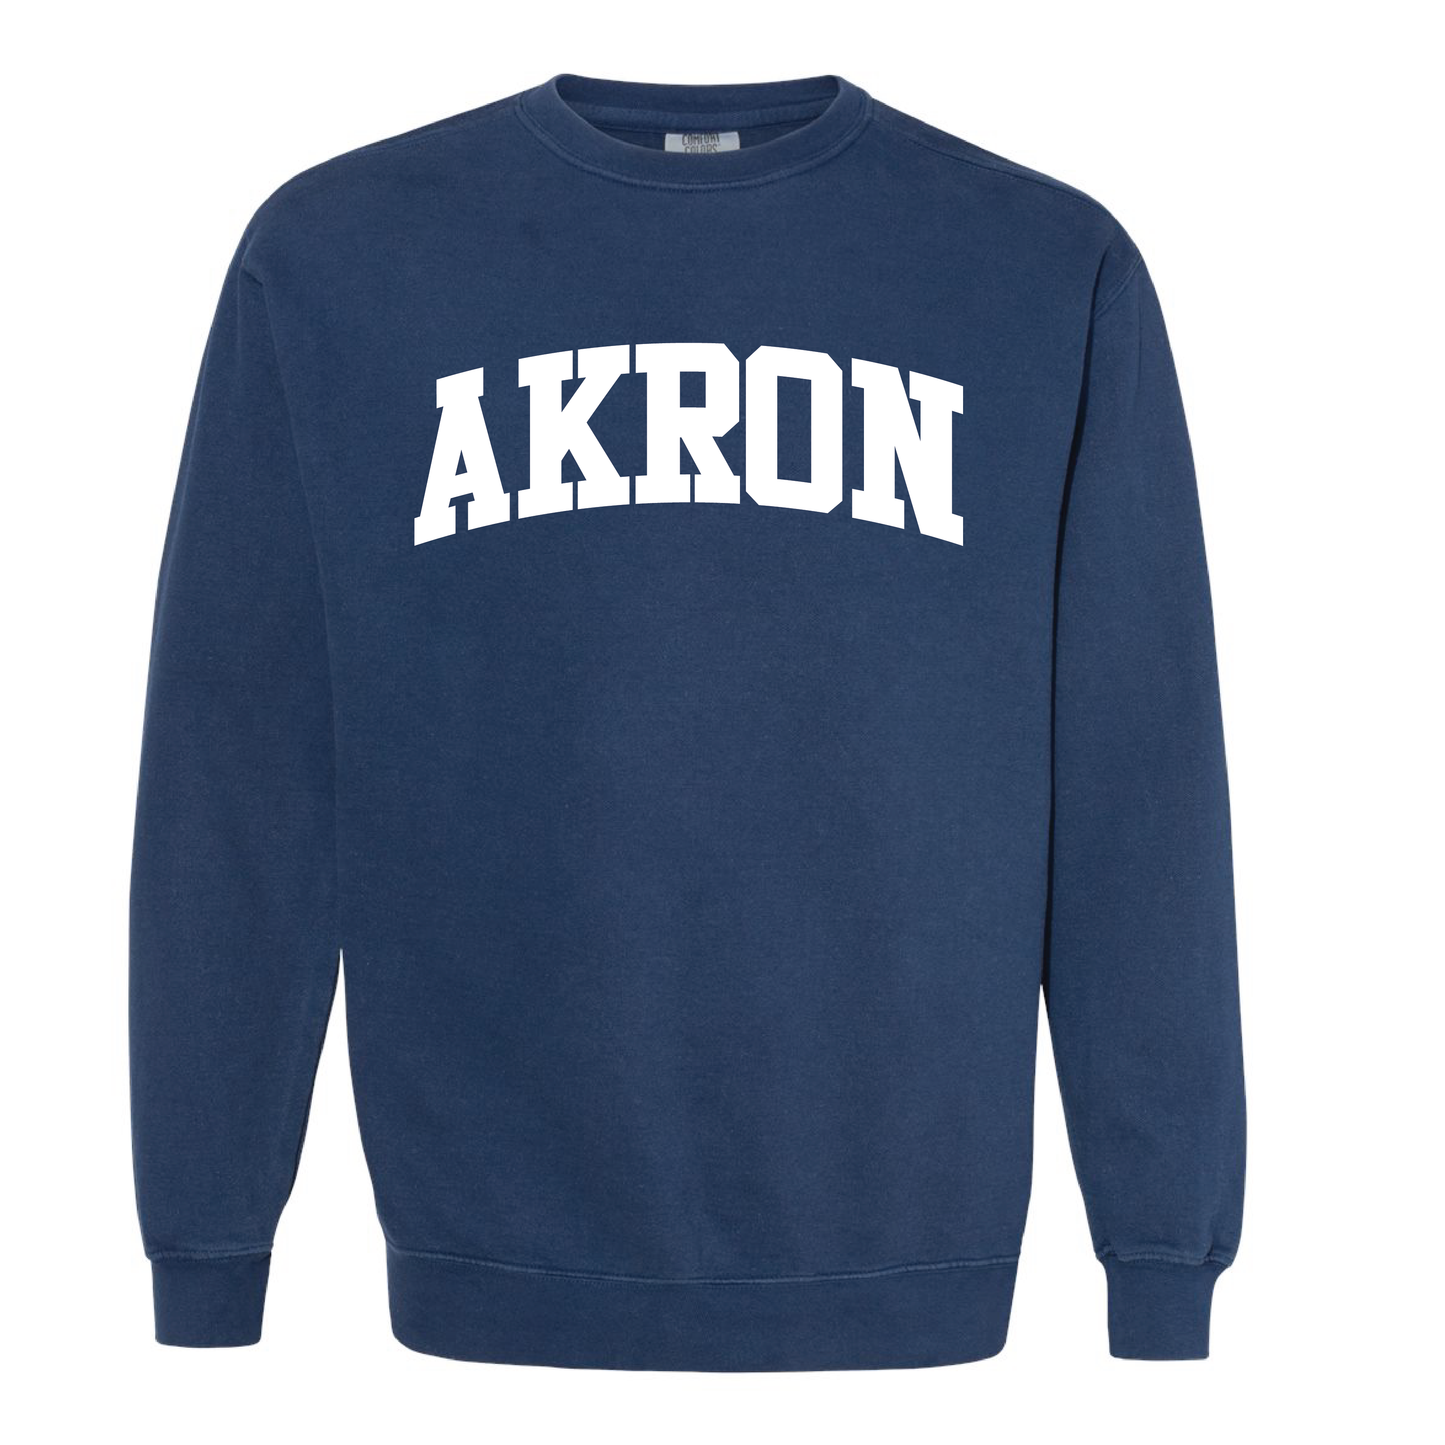 Akron Arch Vintage Adult Sweatshirt